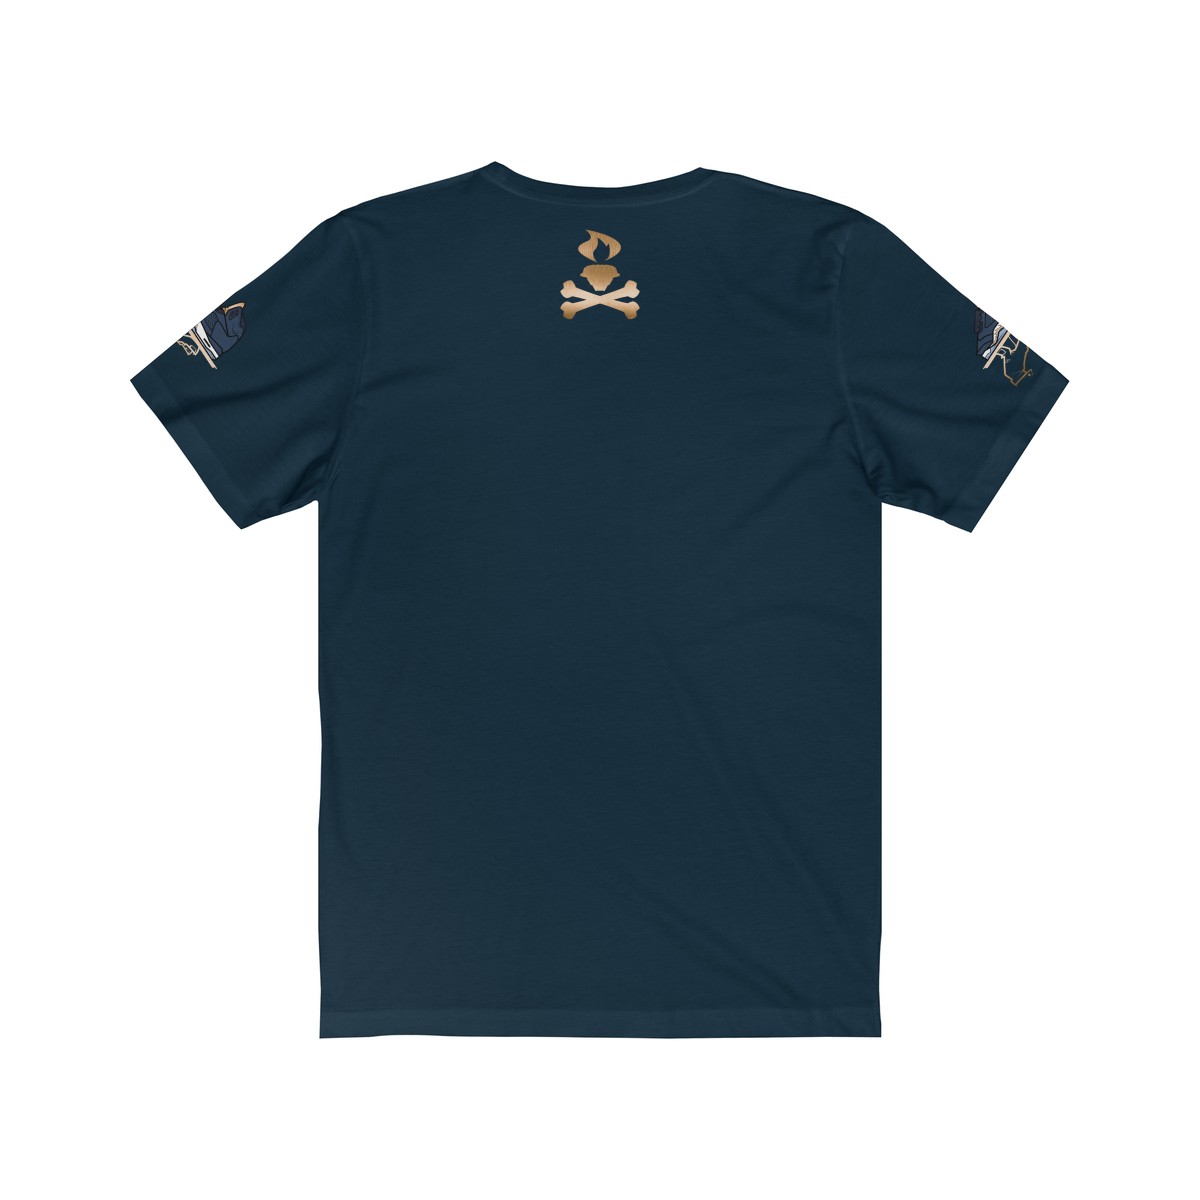 Jordan 5 Bronze T-Shirt | Cheffy LitKickz